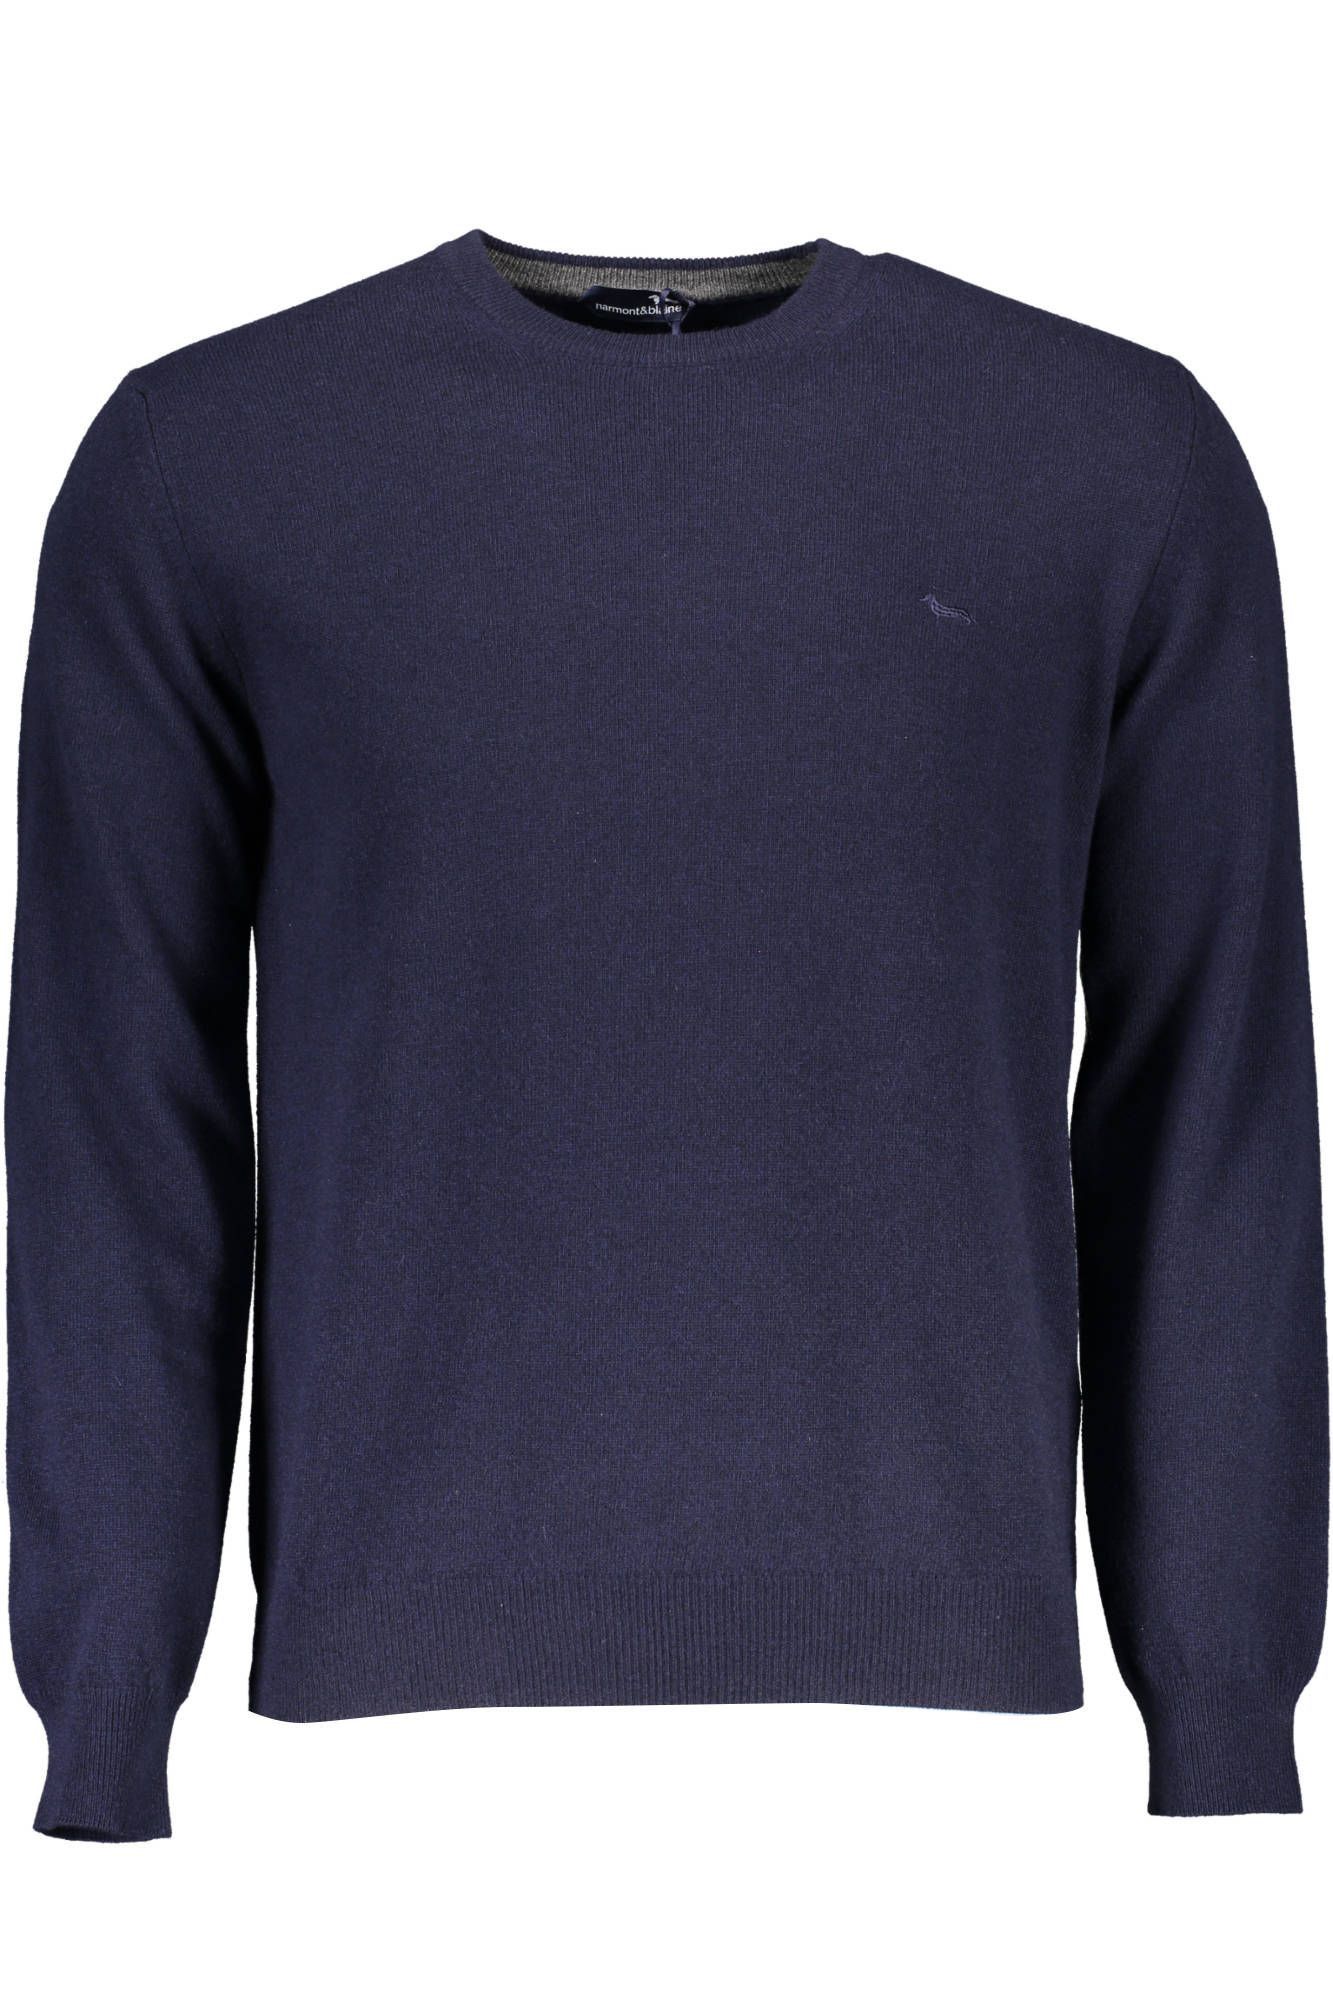 Harmont & Blaine Harmont & Blaine Blue Wool Sweater | Grailed